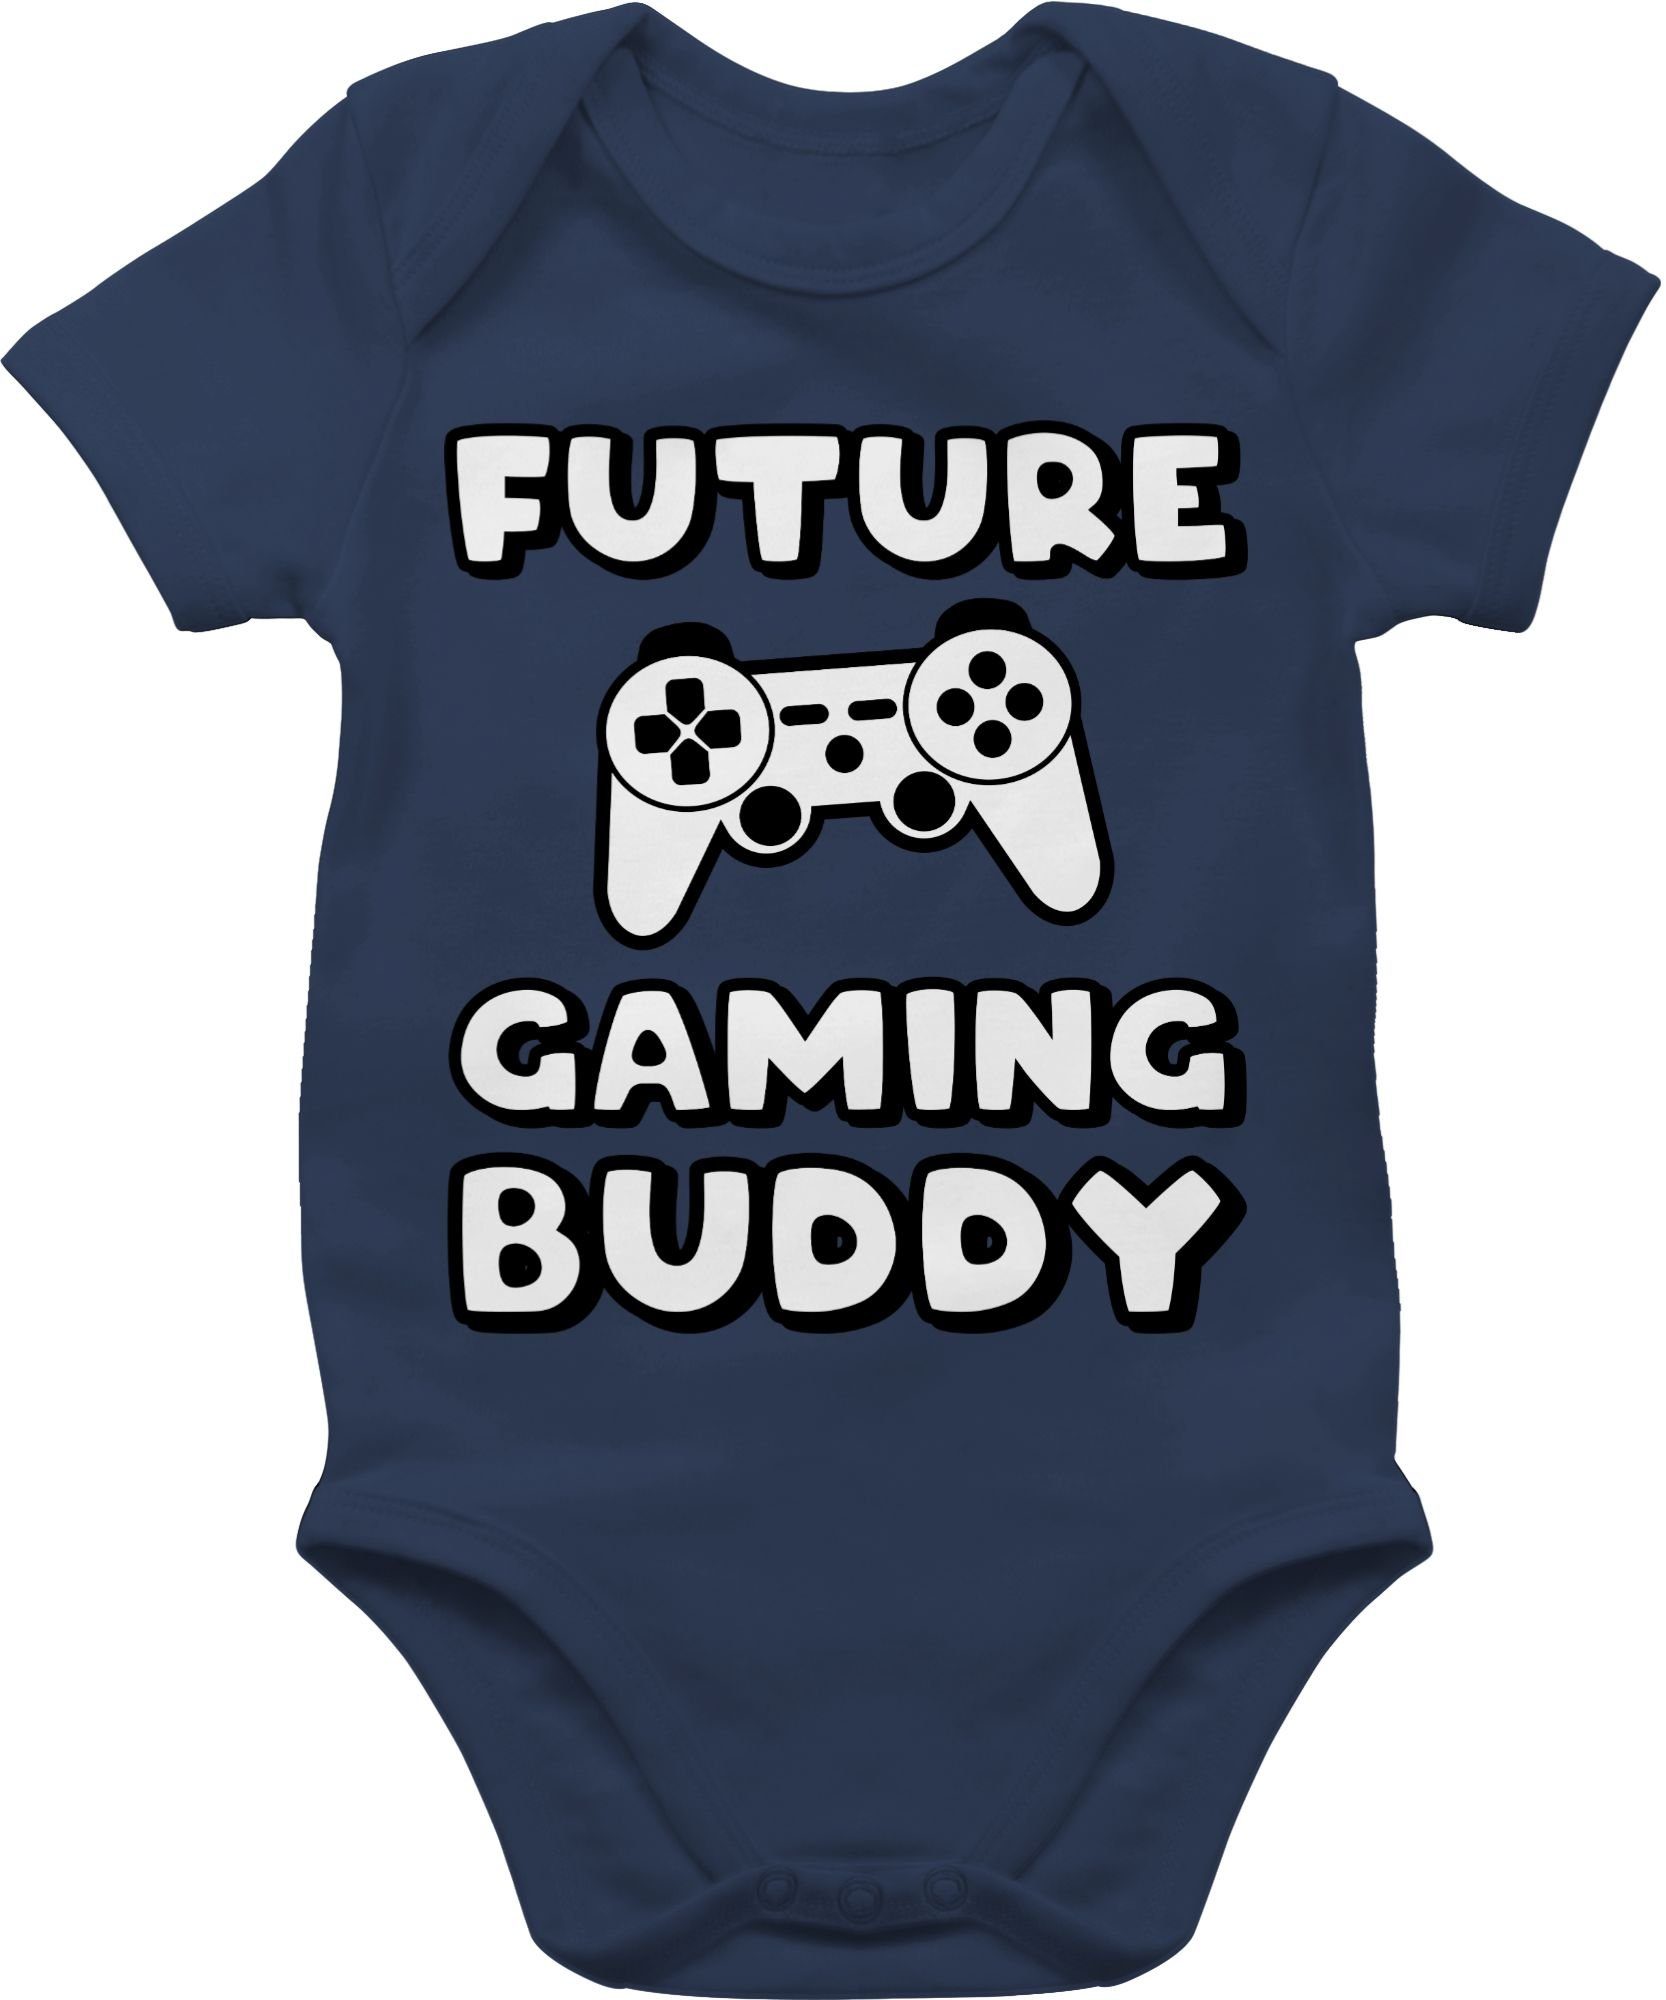 Shirtracer Shirtbody Future Gaming Buddy Sprüche Baby 2 Navy Blau